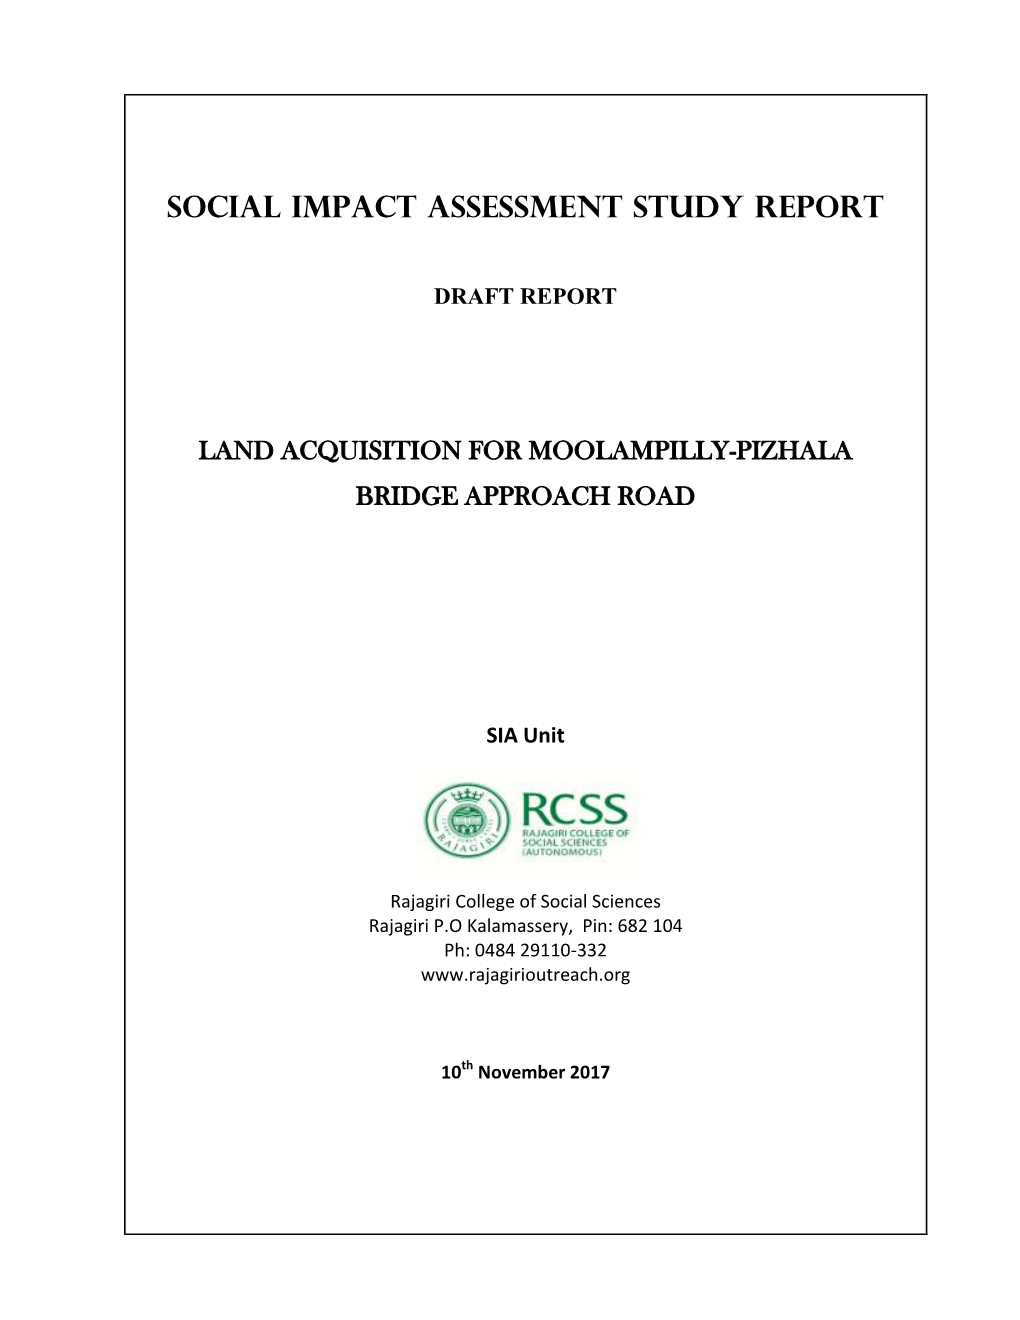 Social Impact Assessment Study Report